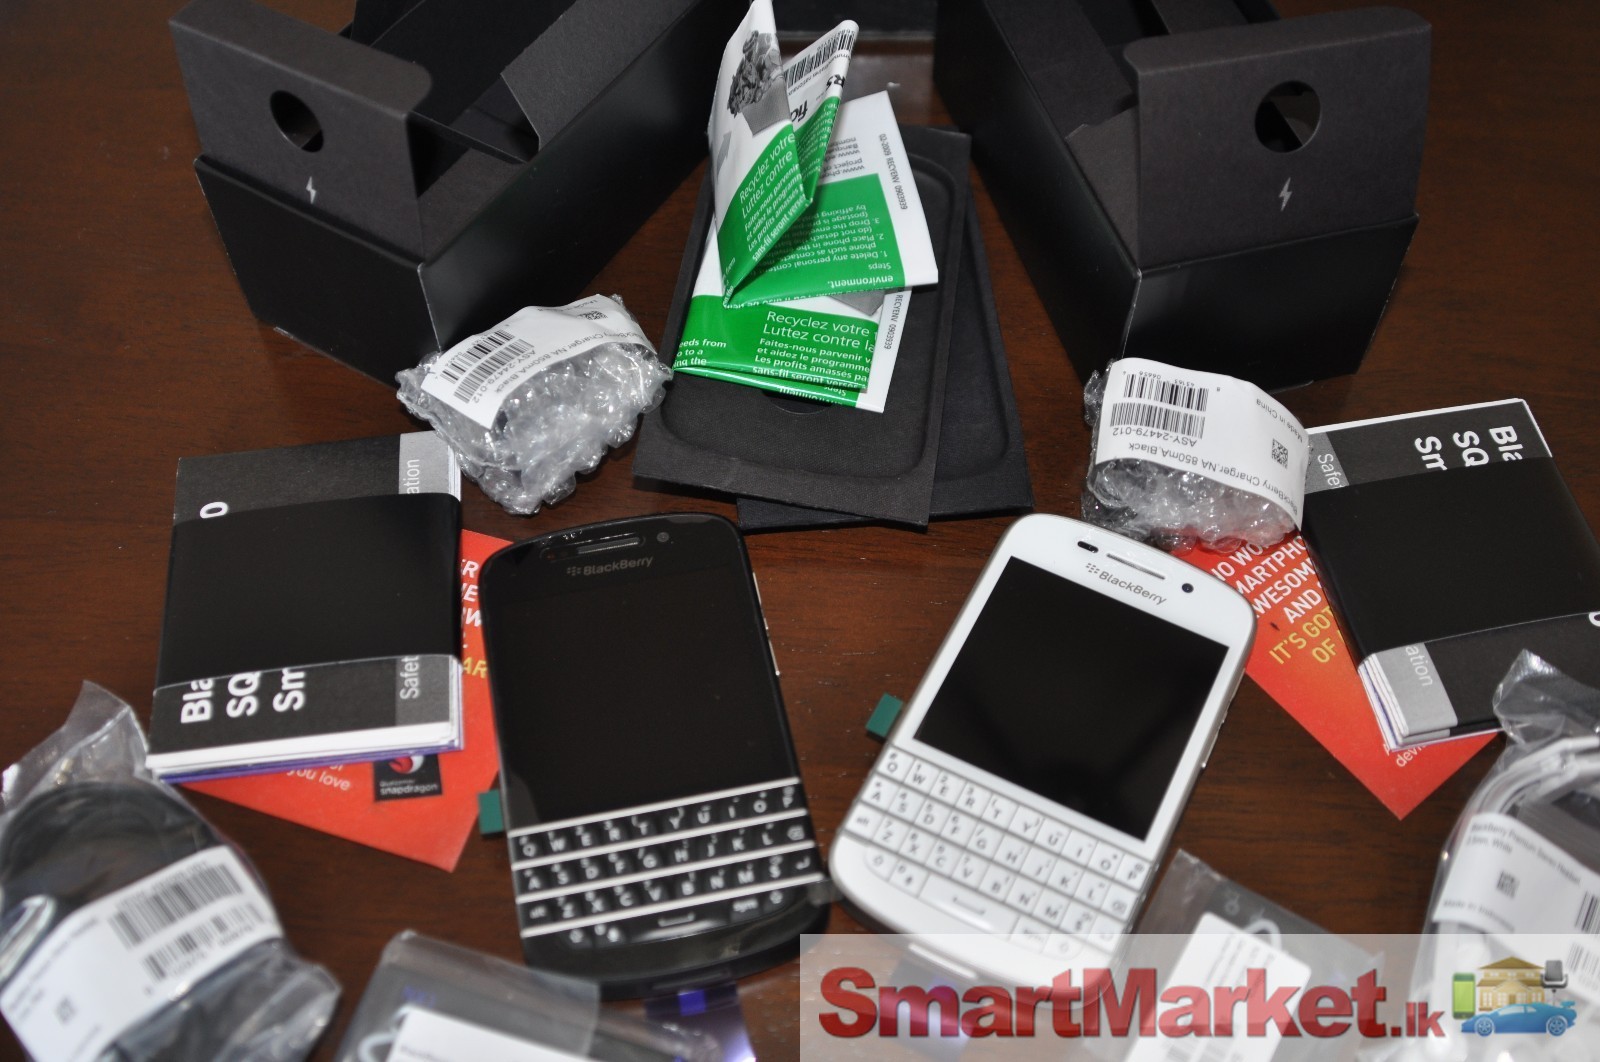 Buy Original Blackberry Q10, Blackberry Z10,Apple iPhone 5, Samsung Galaxy S4